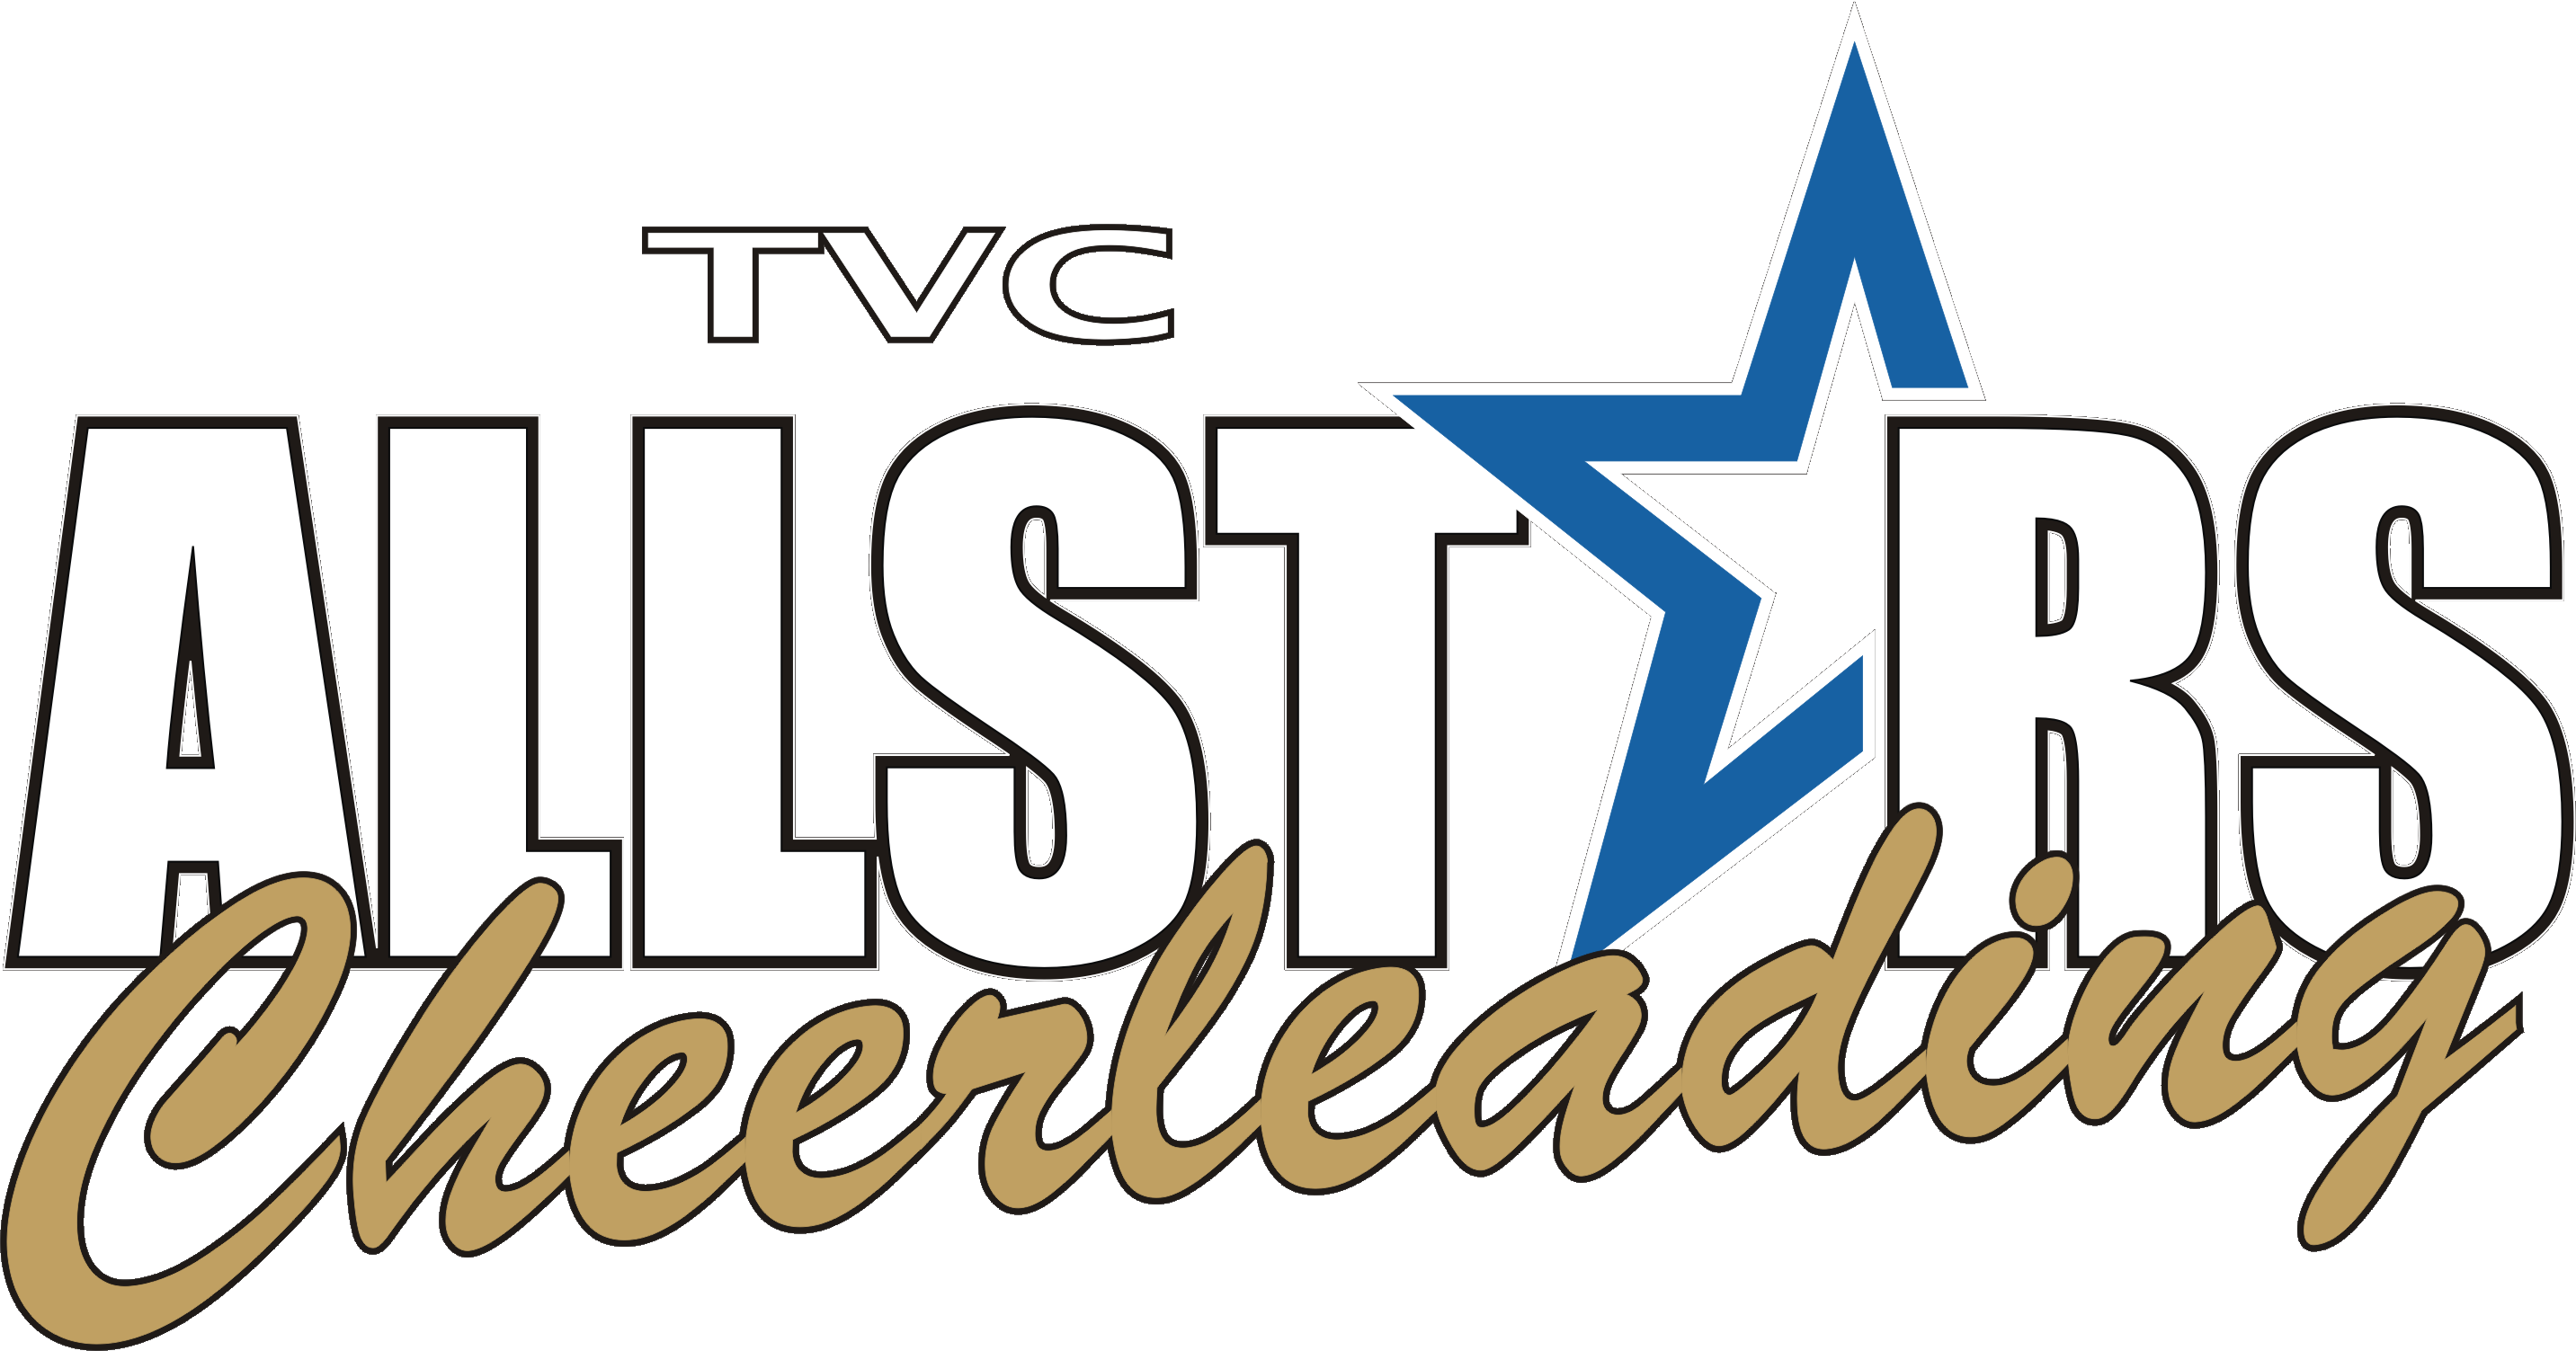 TVC Allstars Cheerleading